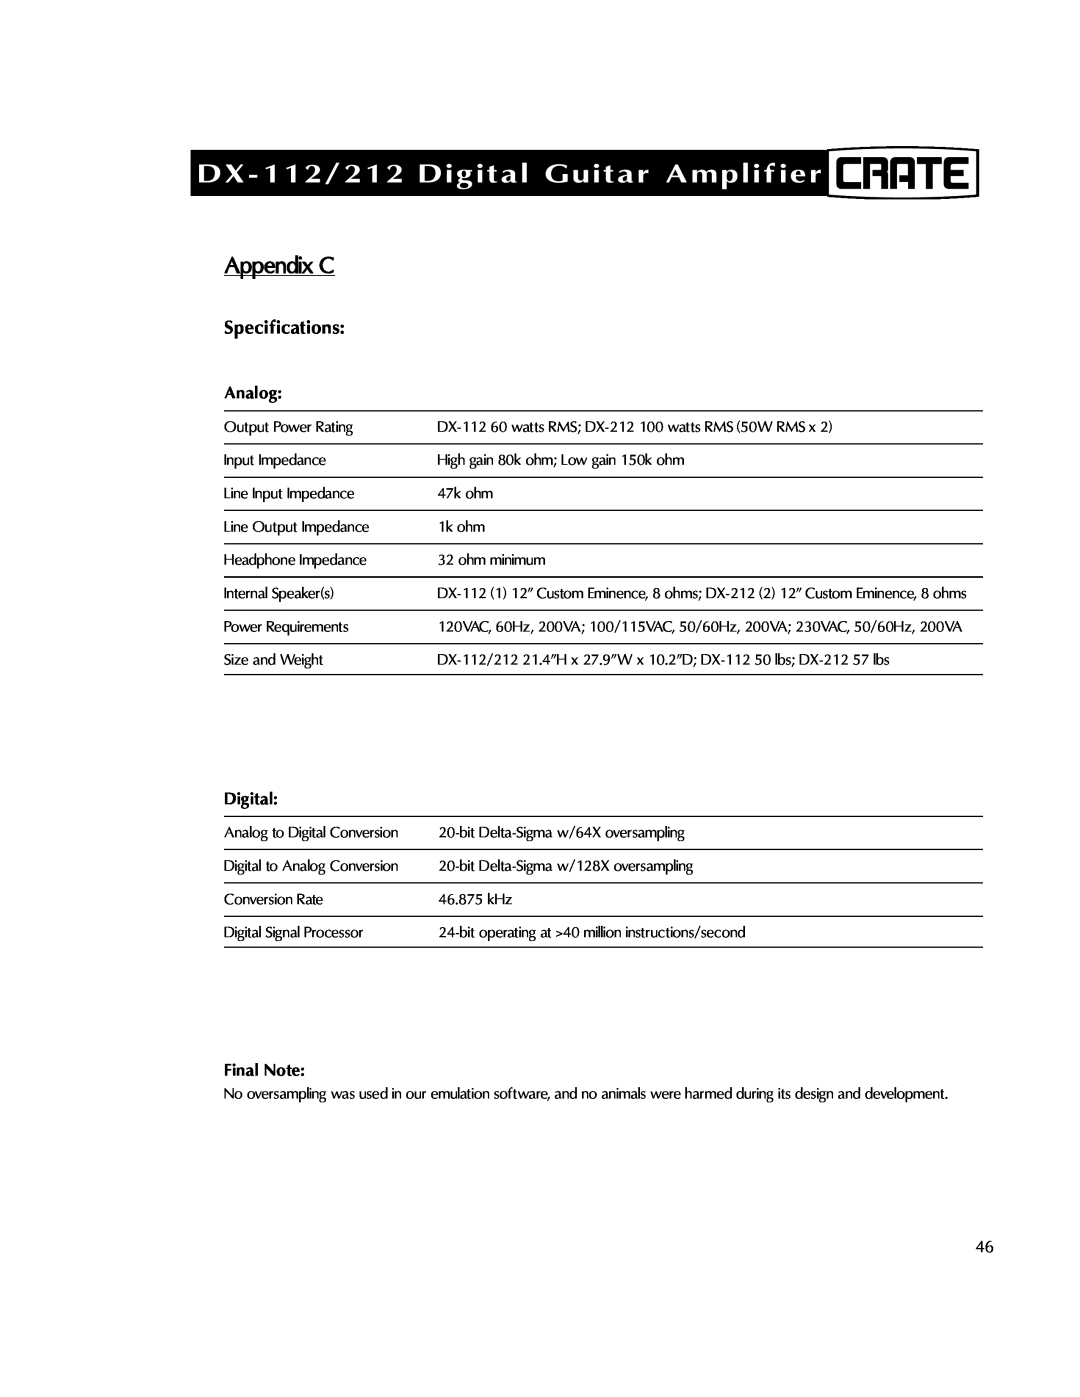 Crate Amplifiers DX-212 manual Appendix C, Specifications, DX-112/212Digital Guitar Amplifier 